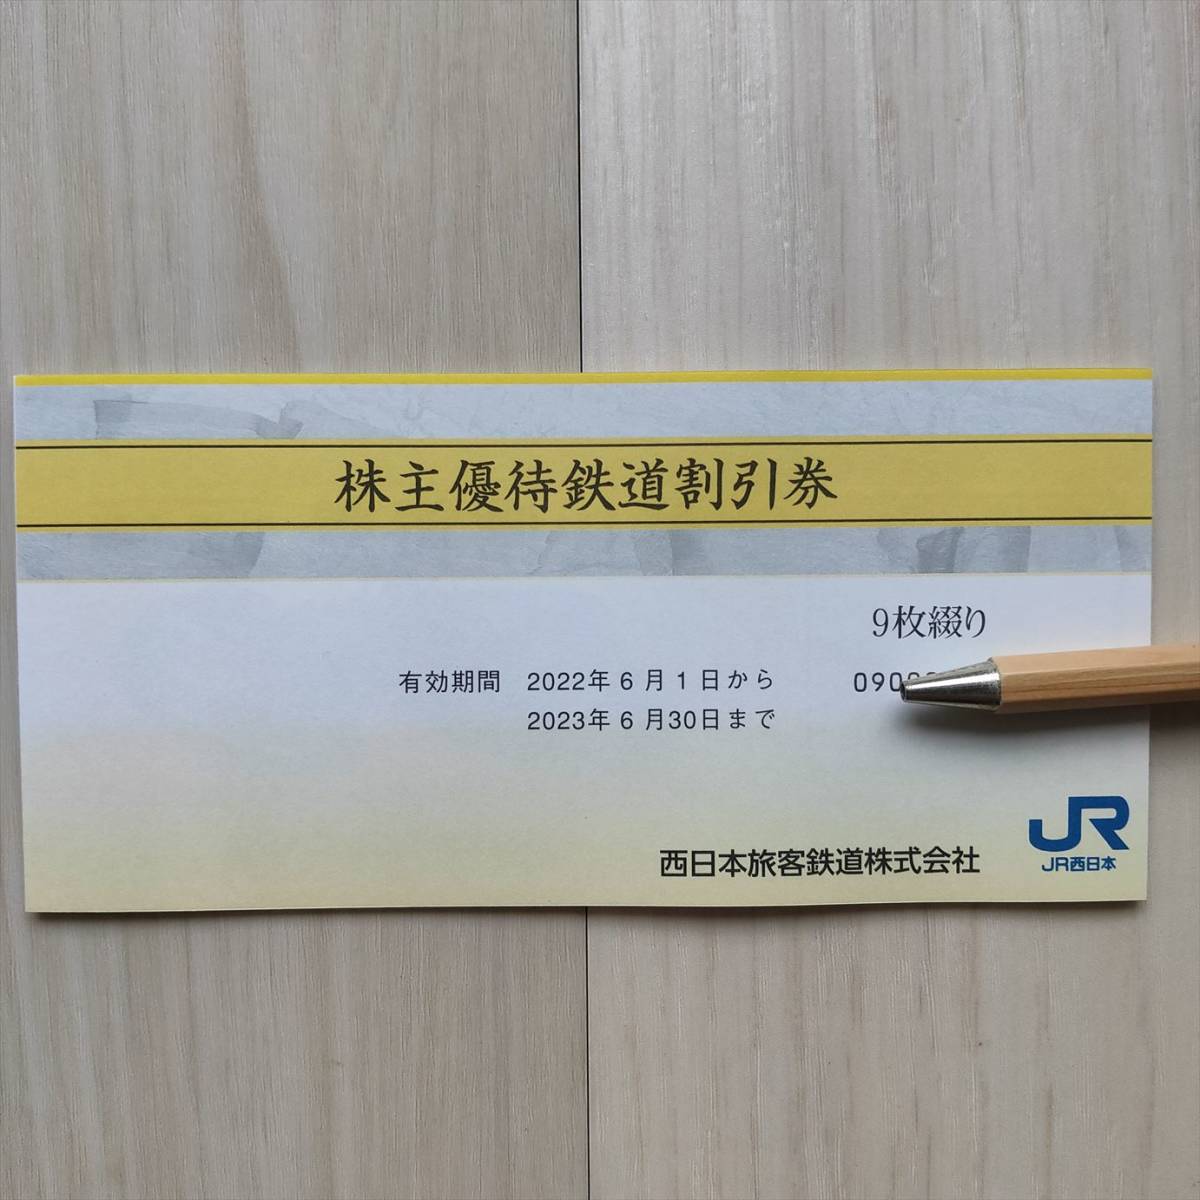 値引きする [9枚]JR西日本 鉄道割引券 株主優待 優待券、割引券